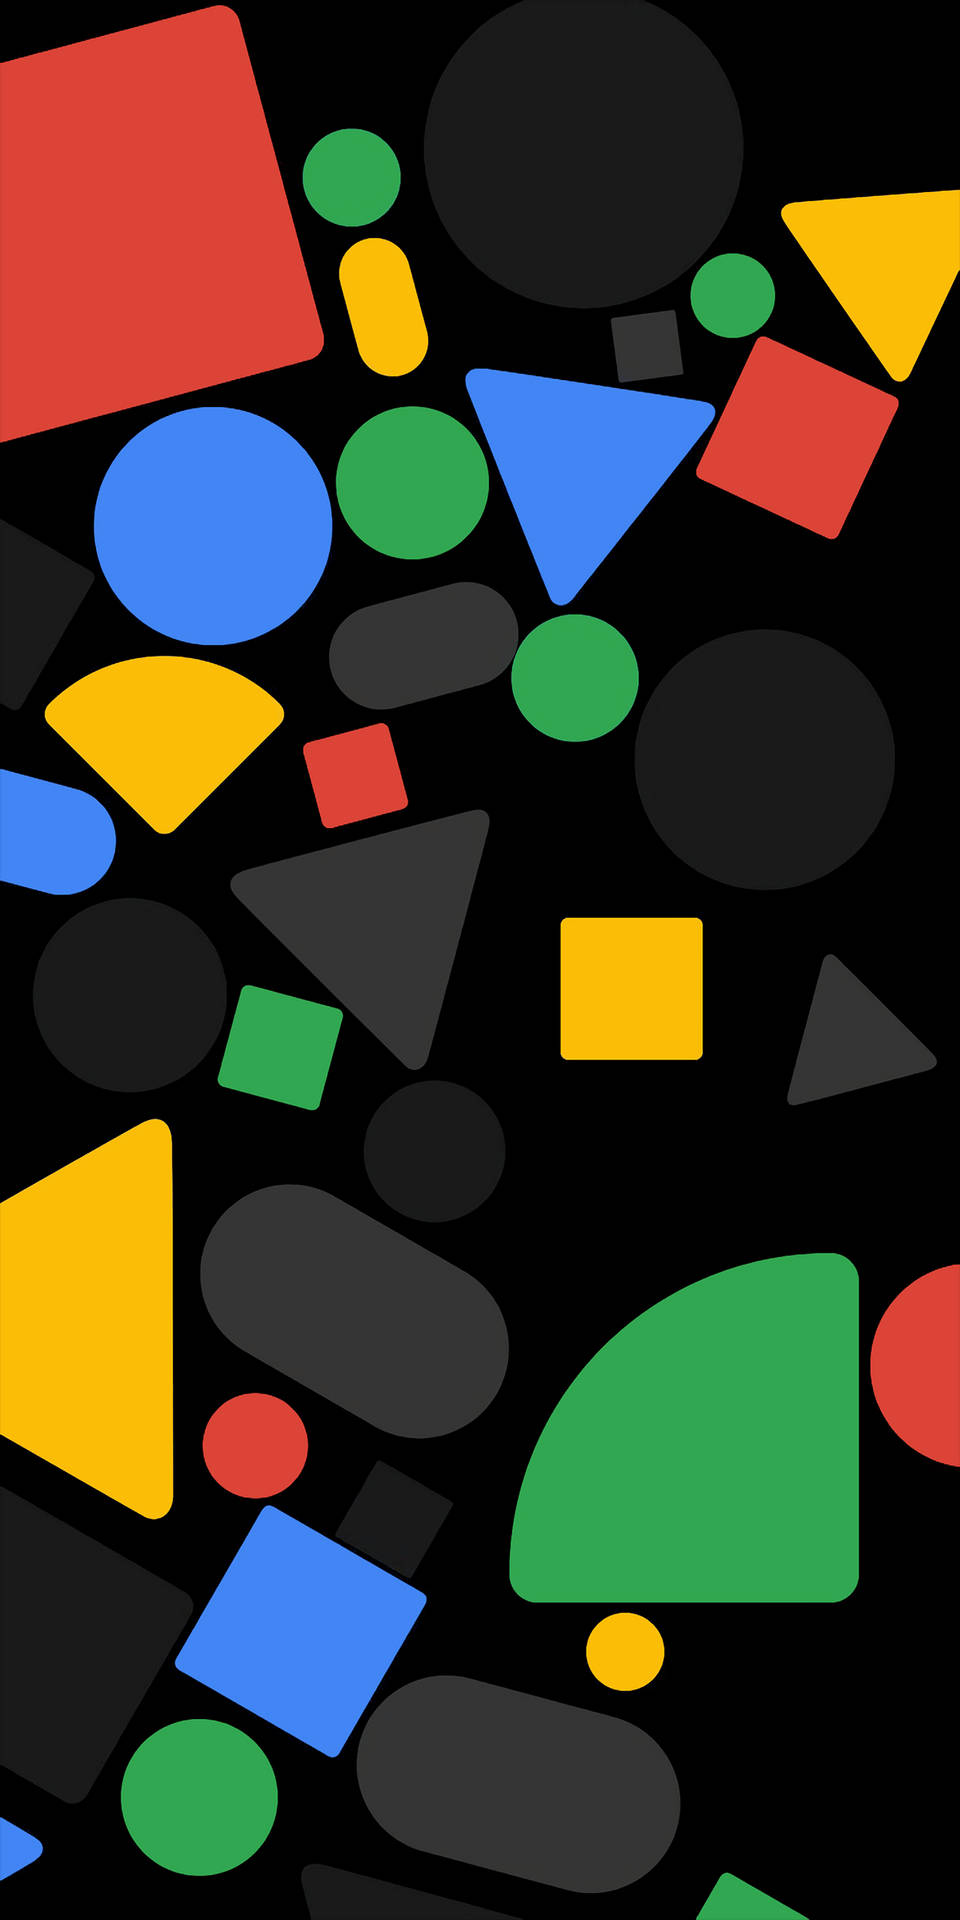 Free Google Pixel 3 Wallpaper Downloads, [100+] Google Pixel 3 Wallpapers  for FREE 